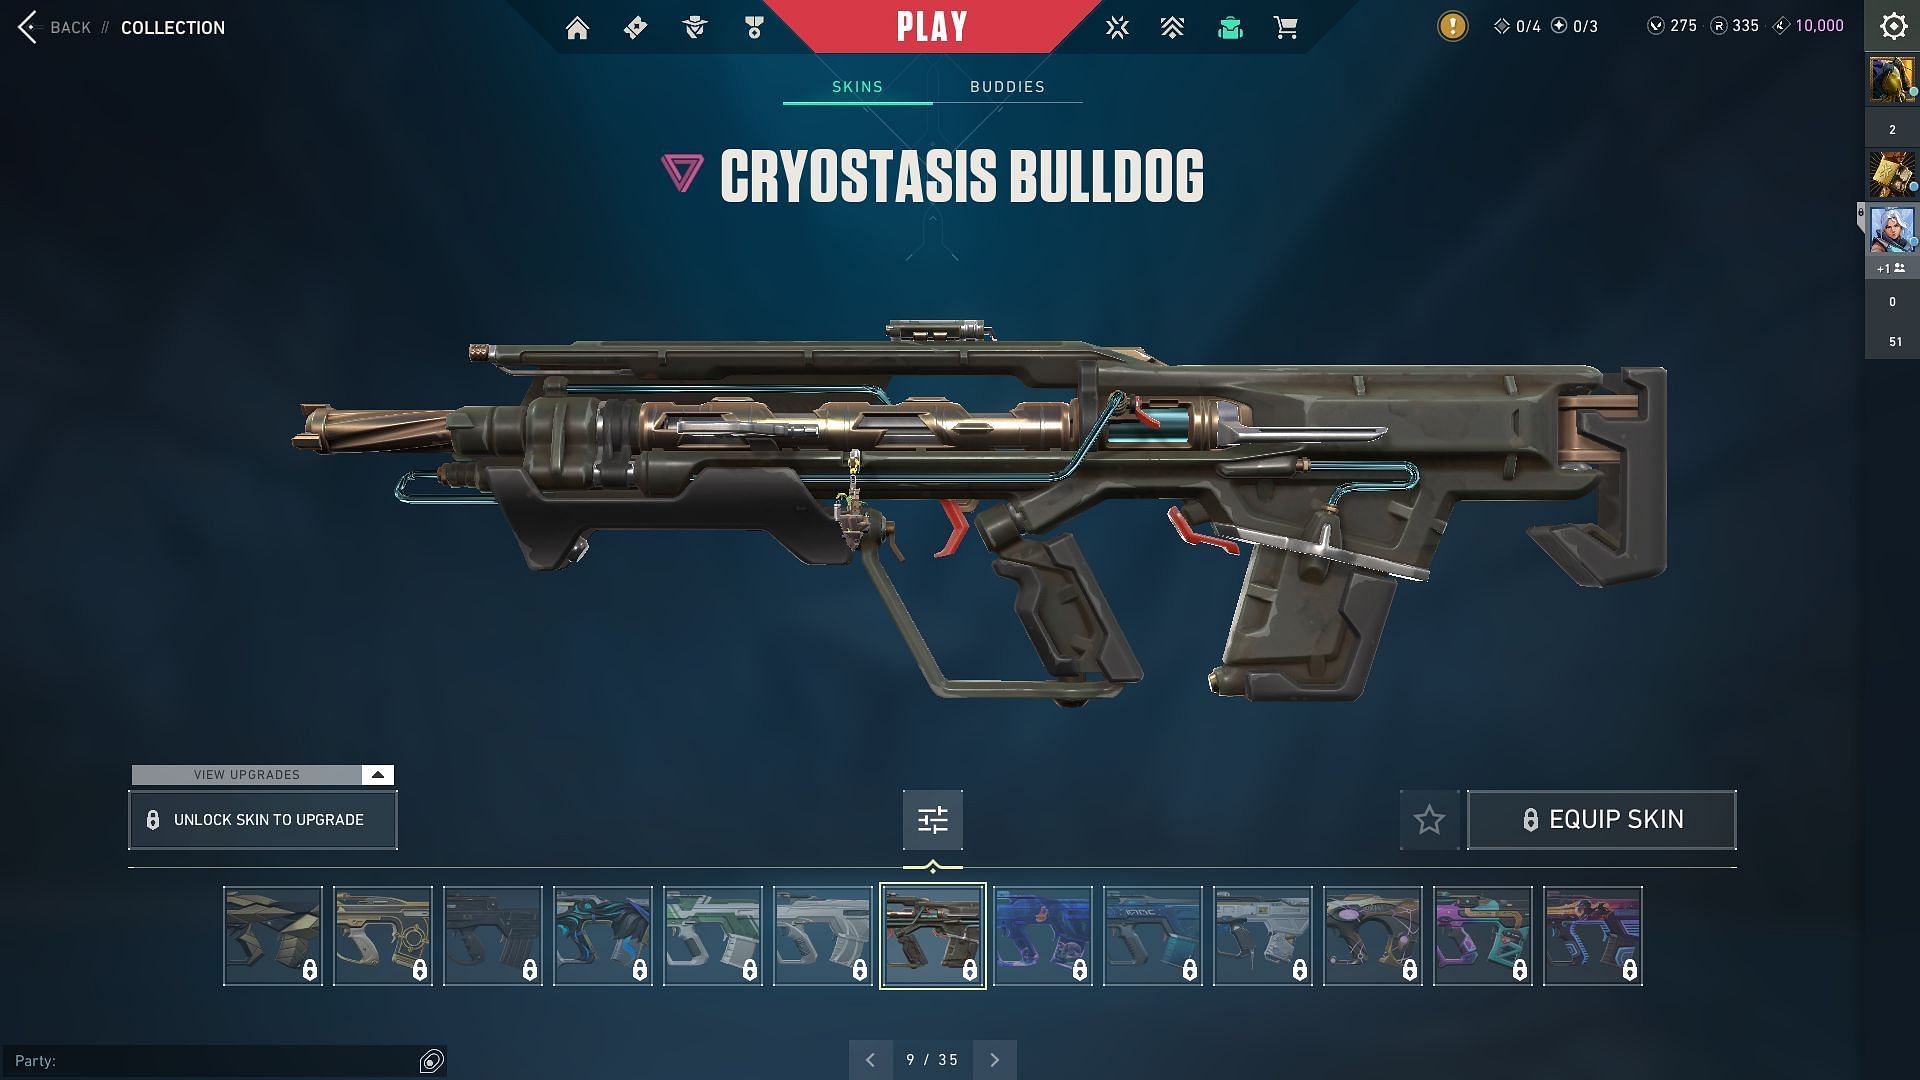 Cryostasis Bulldog (Image via Riot Games)